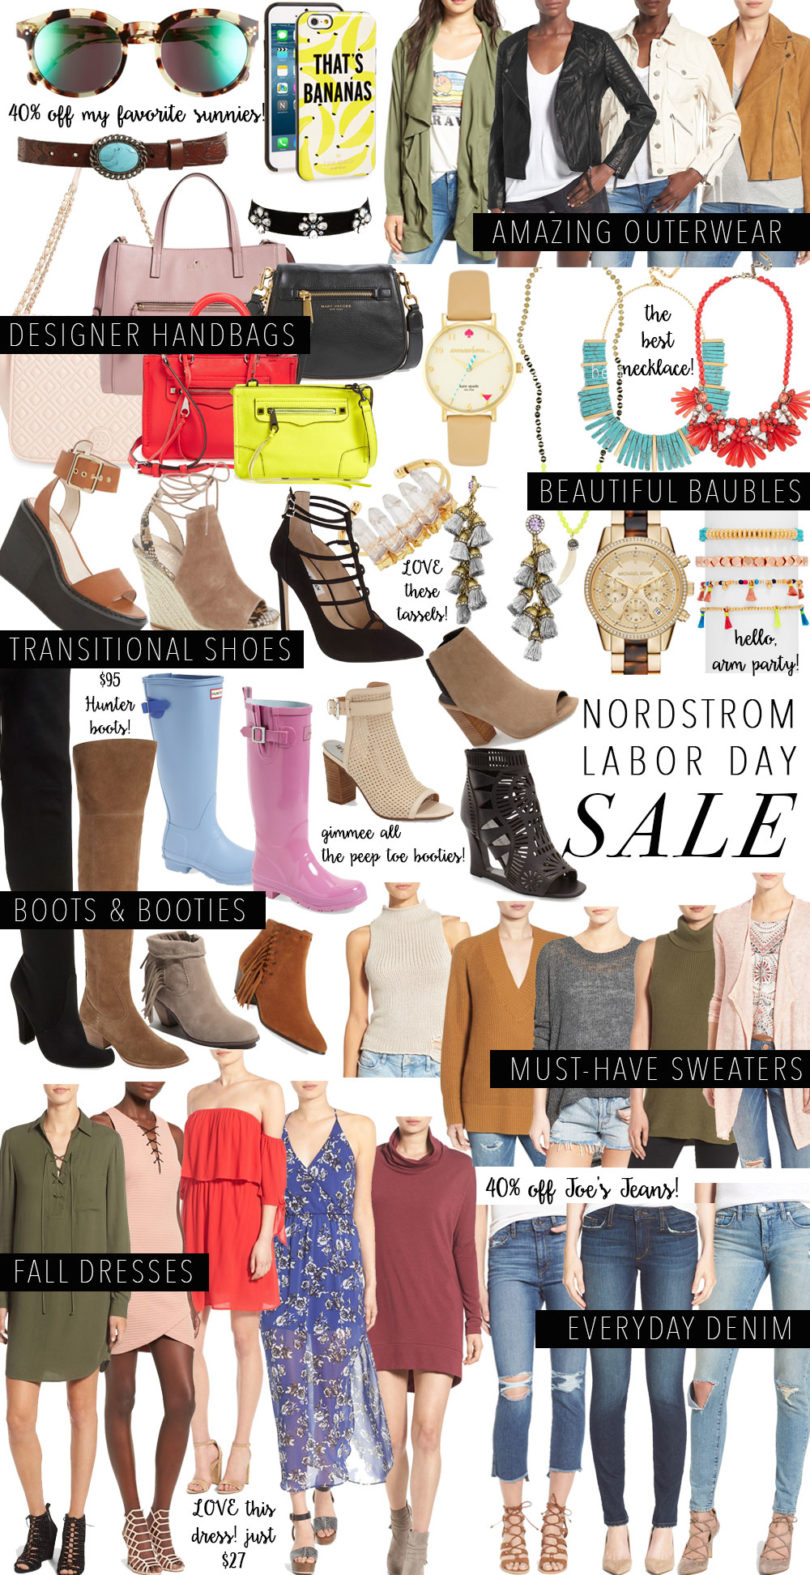 nordstrom-labor-day-sale-boots-booties-designer-handbags-discount-deal-tory-burch-baublebar-hunter-rebecca-minkoff